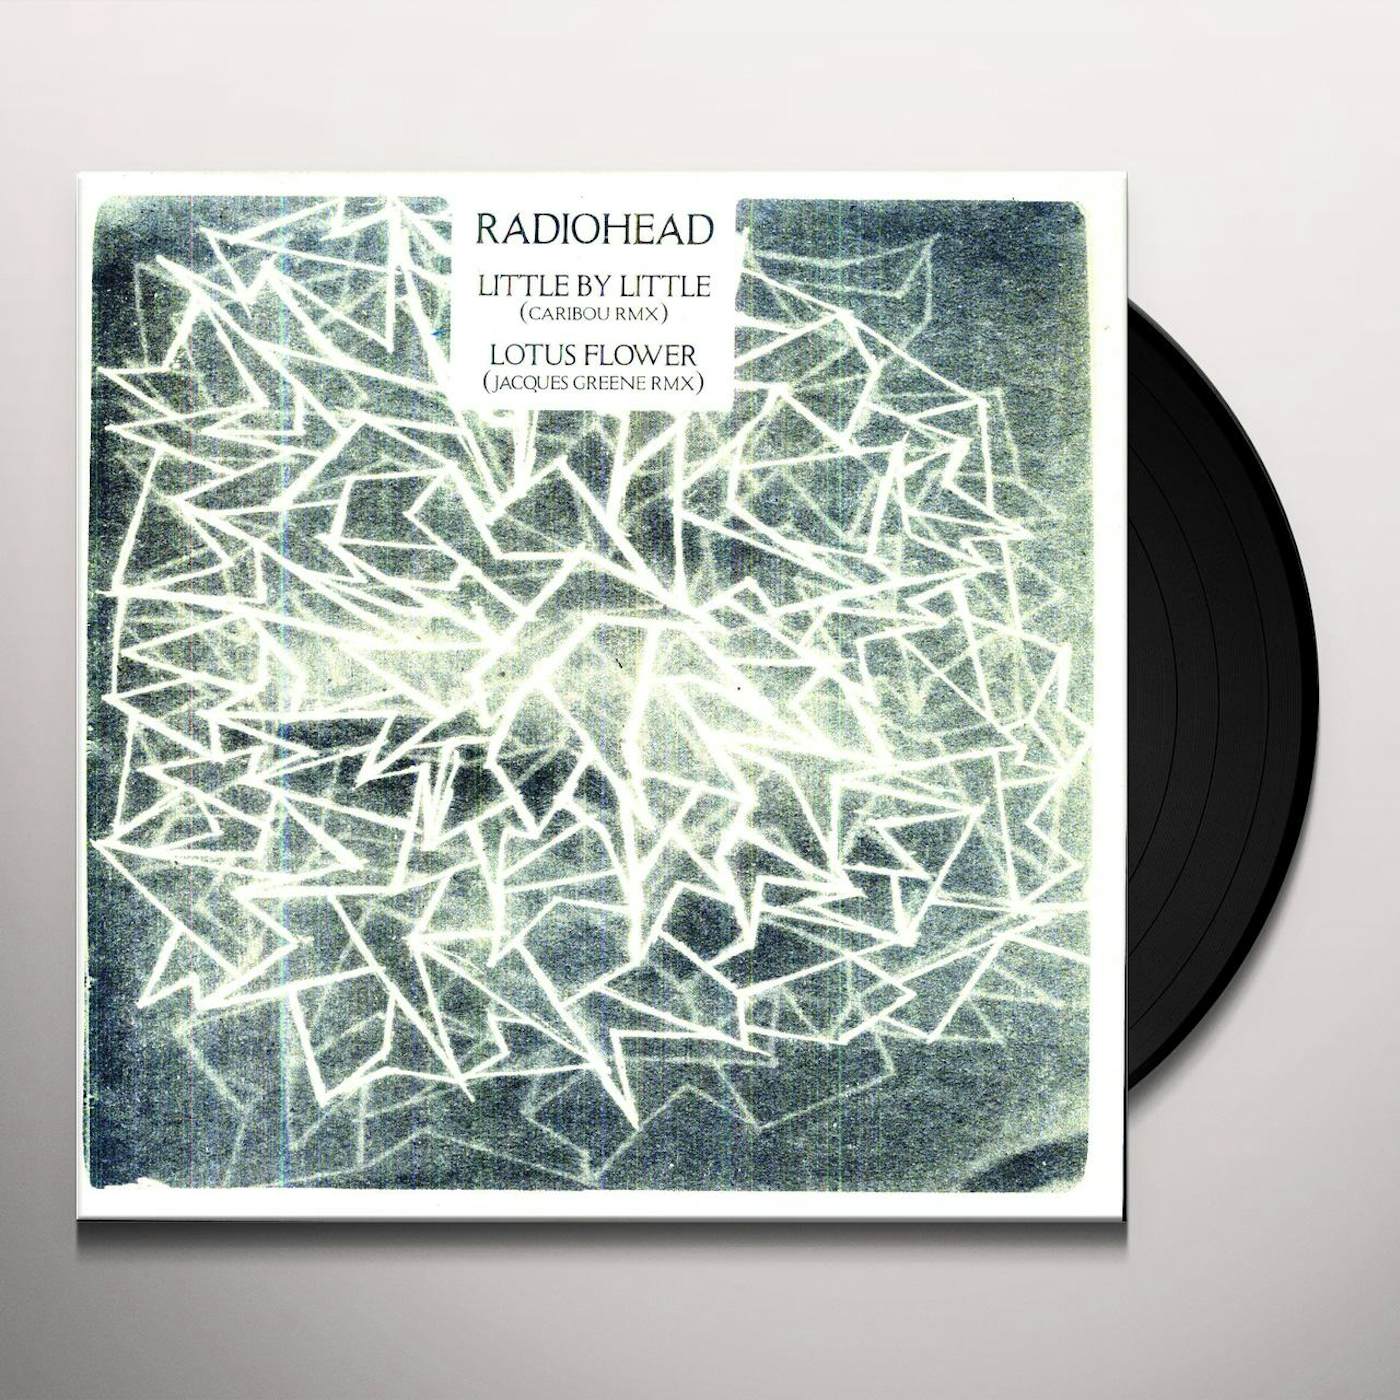 Radiohead Vinyl Record Art